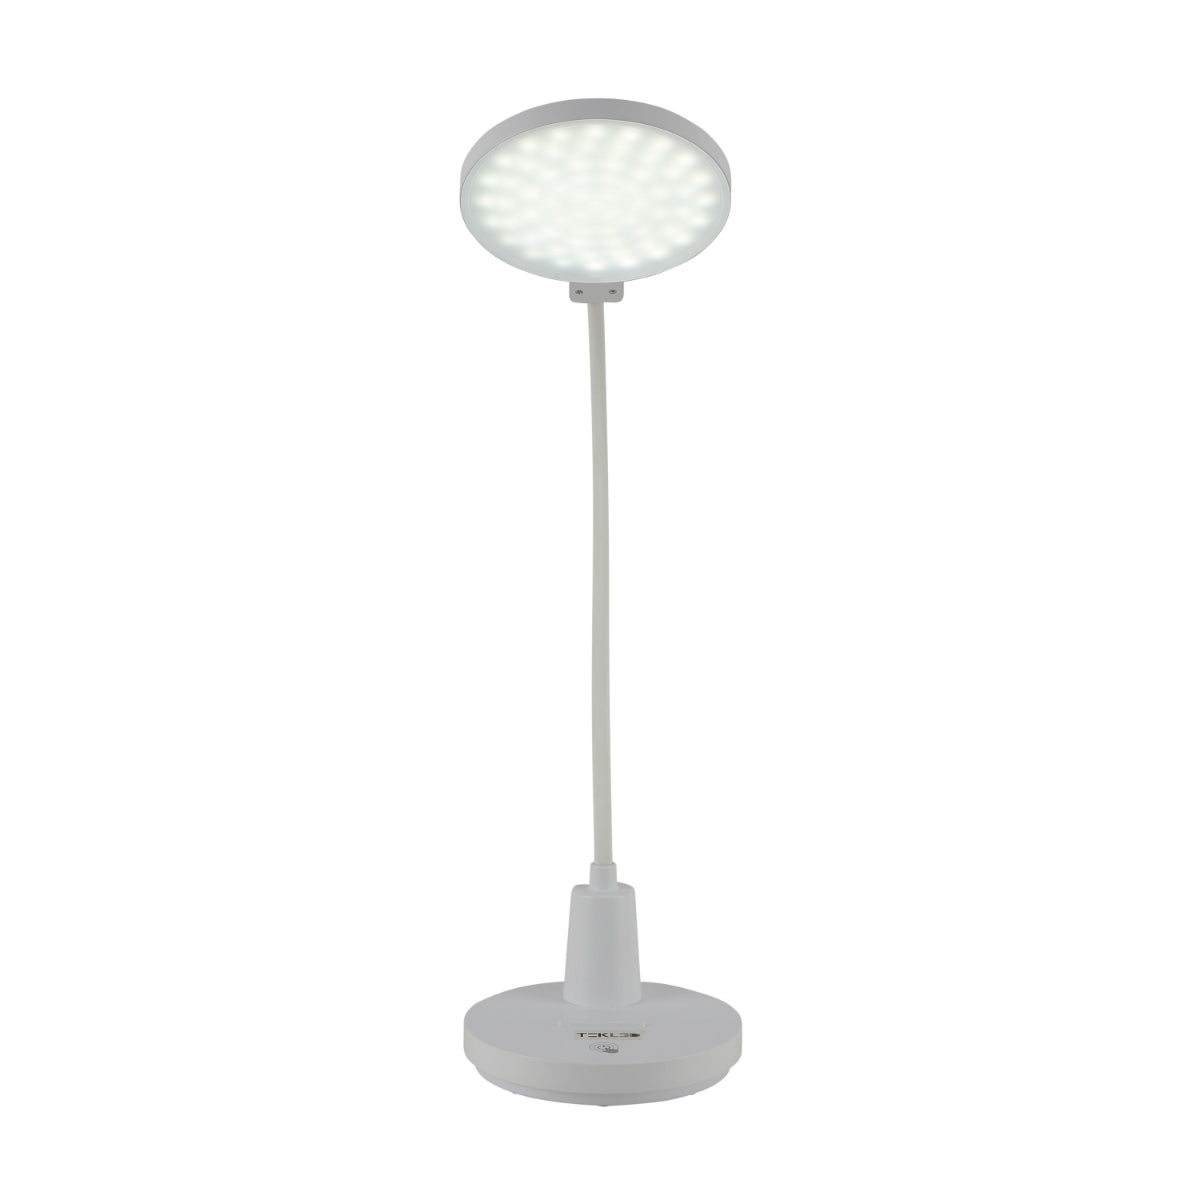 Main image of Sleek Rechargeable Gooseneck LED Desk Lamp 130-03759